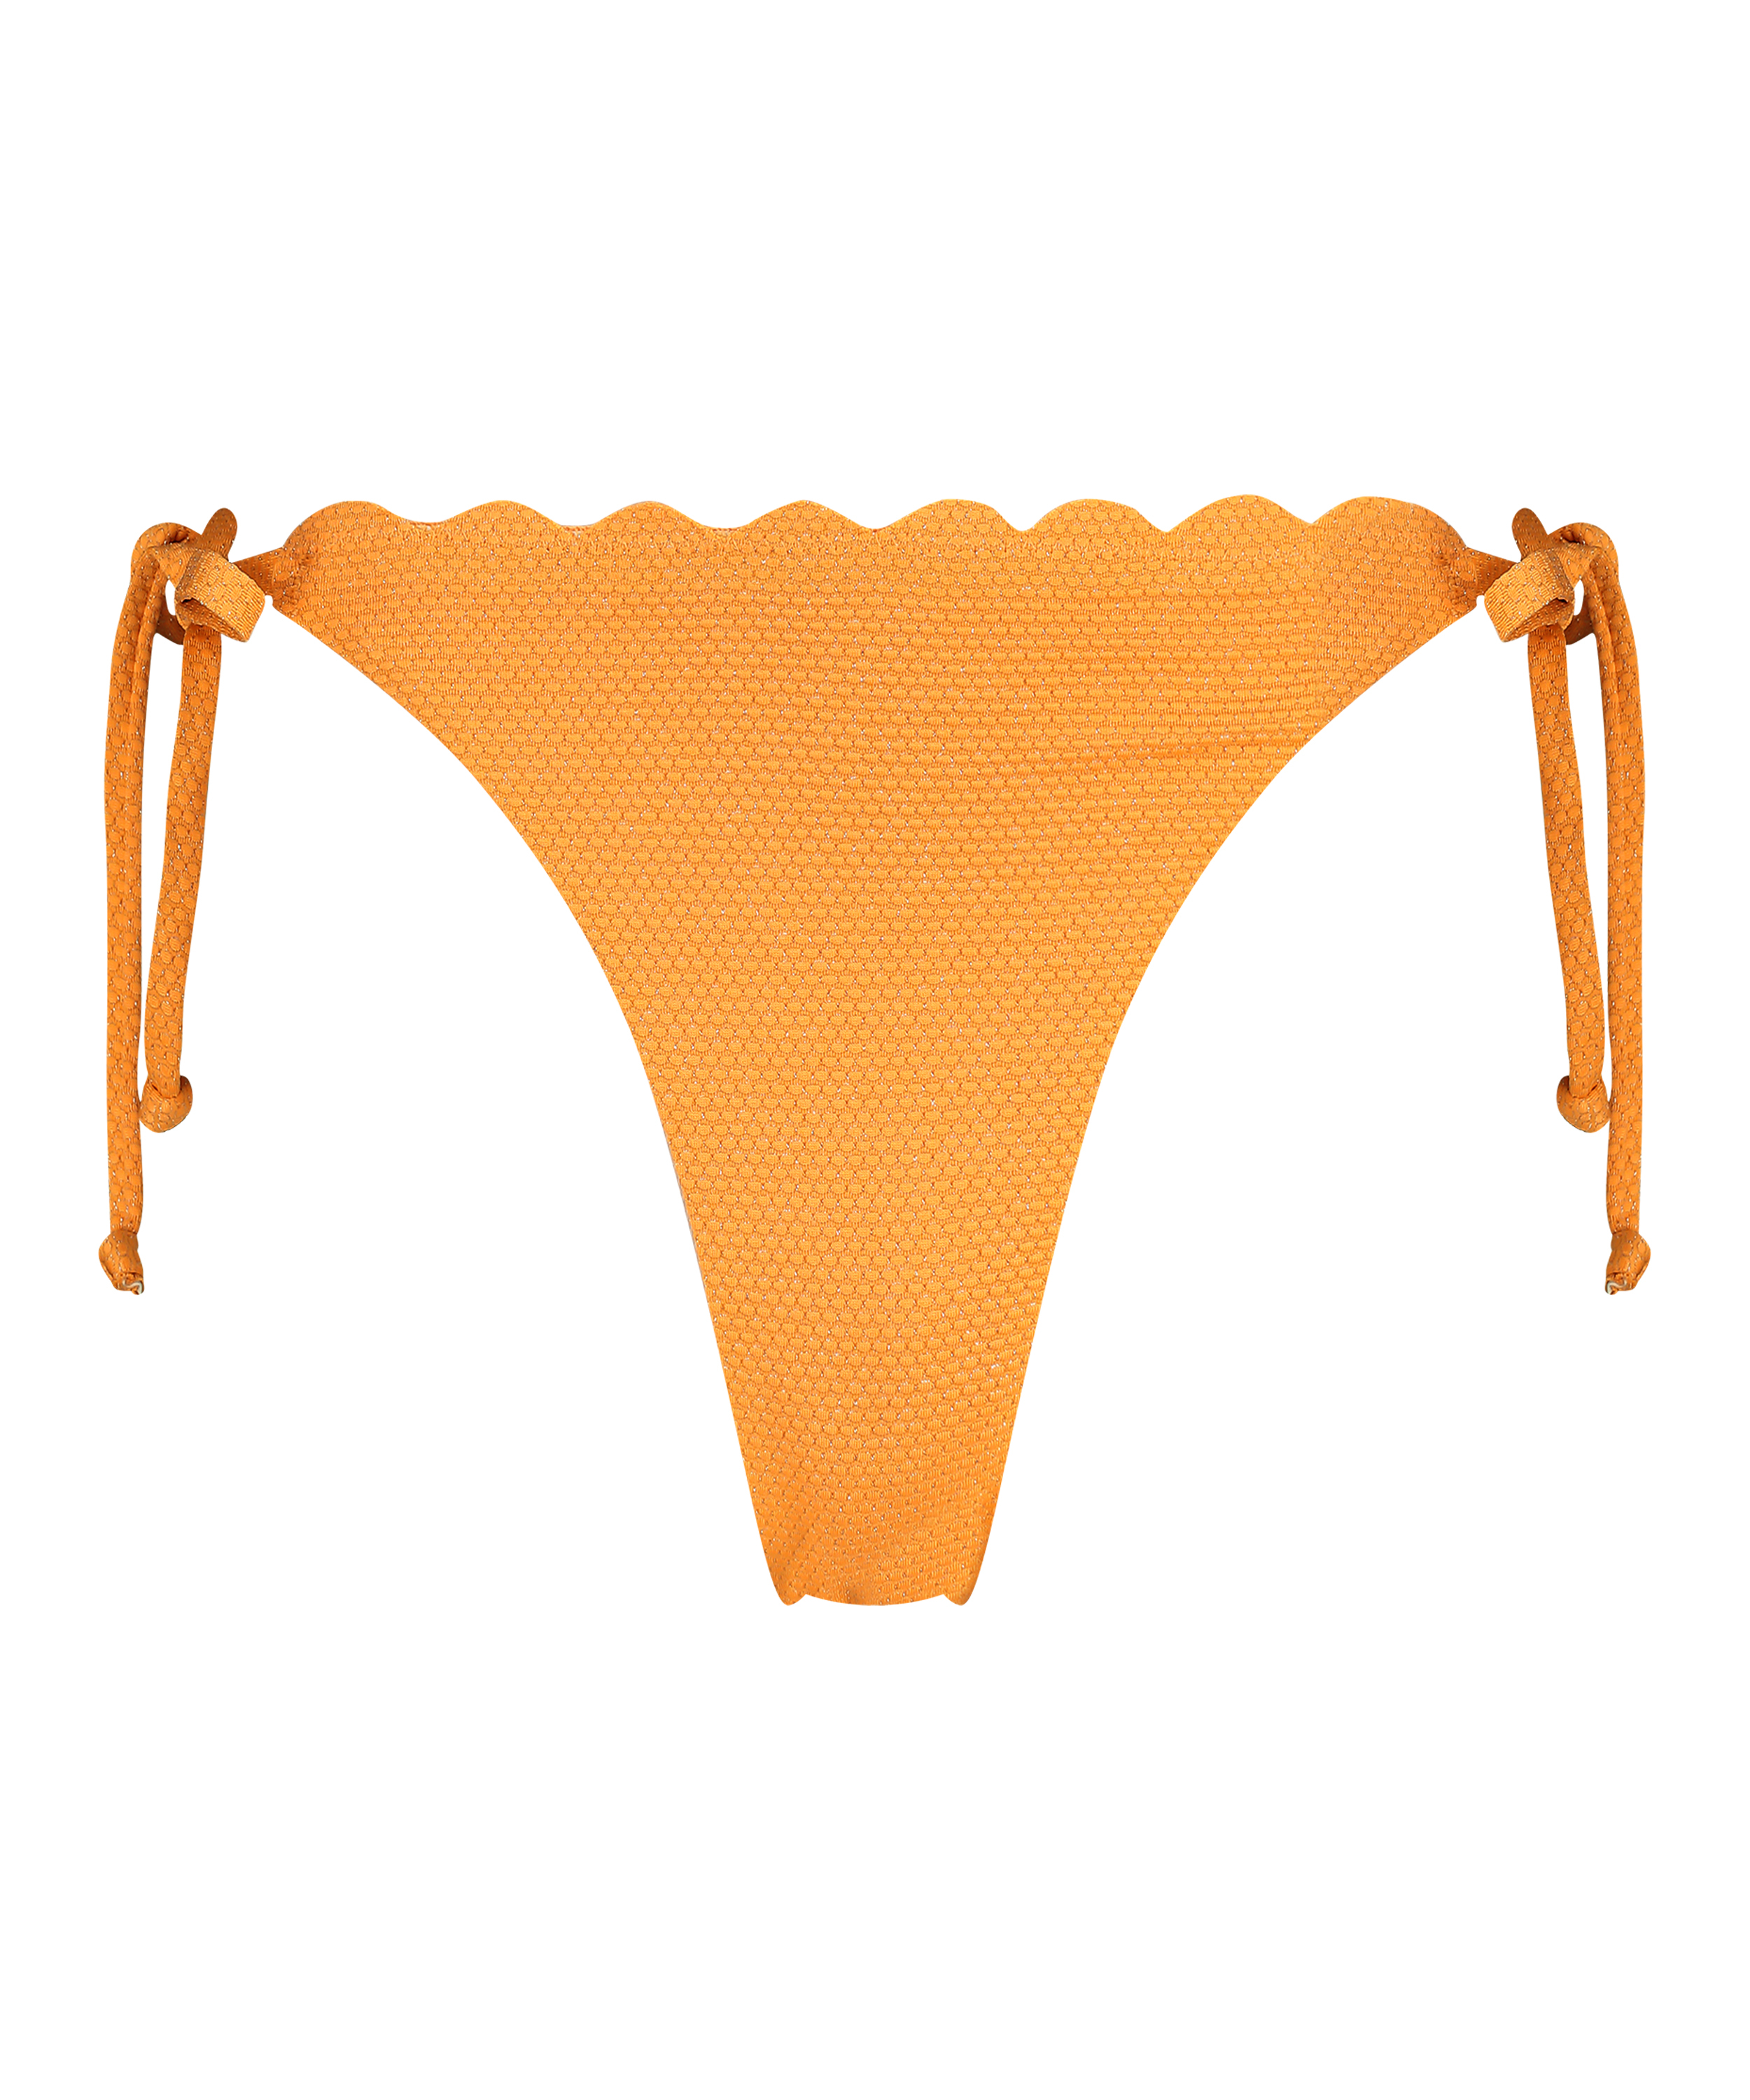 Scallop Lurex Cheeky Tanga Bikini Bottoms, Orange, main